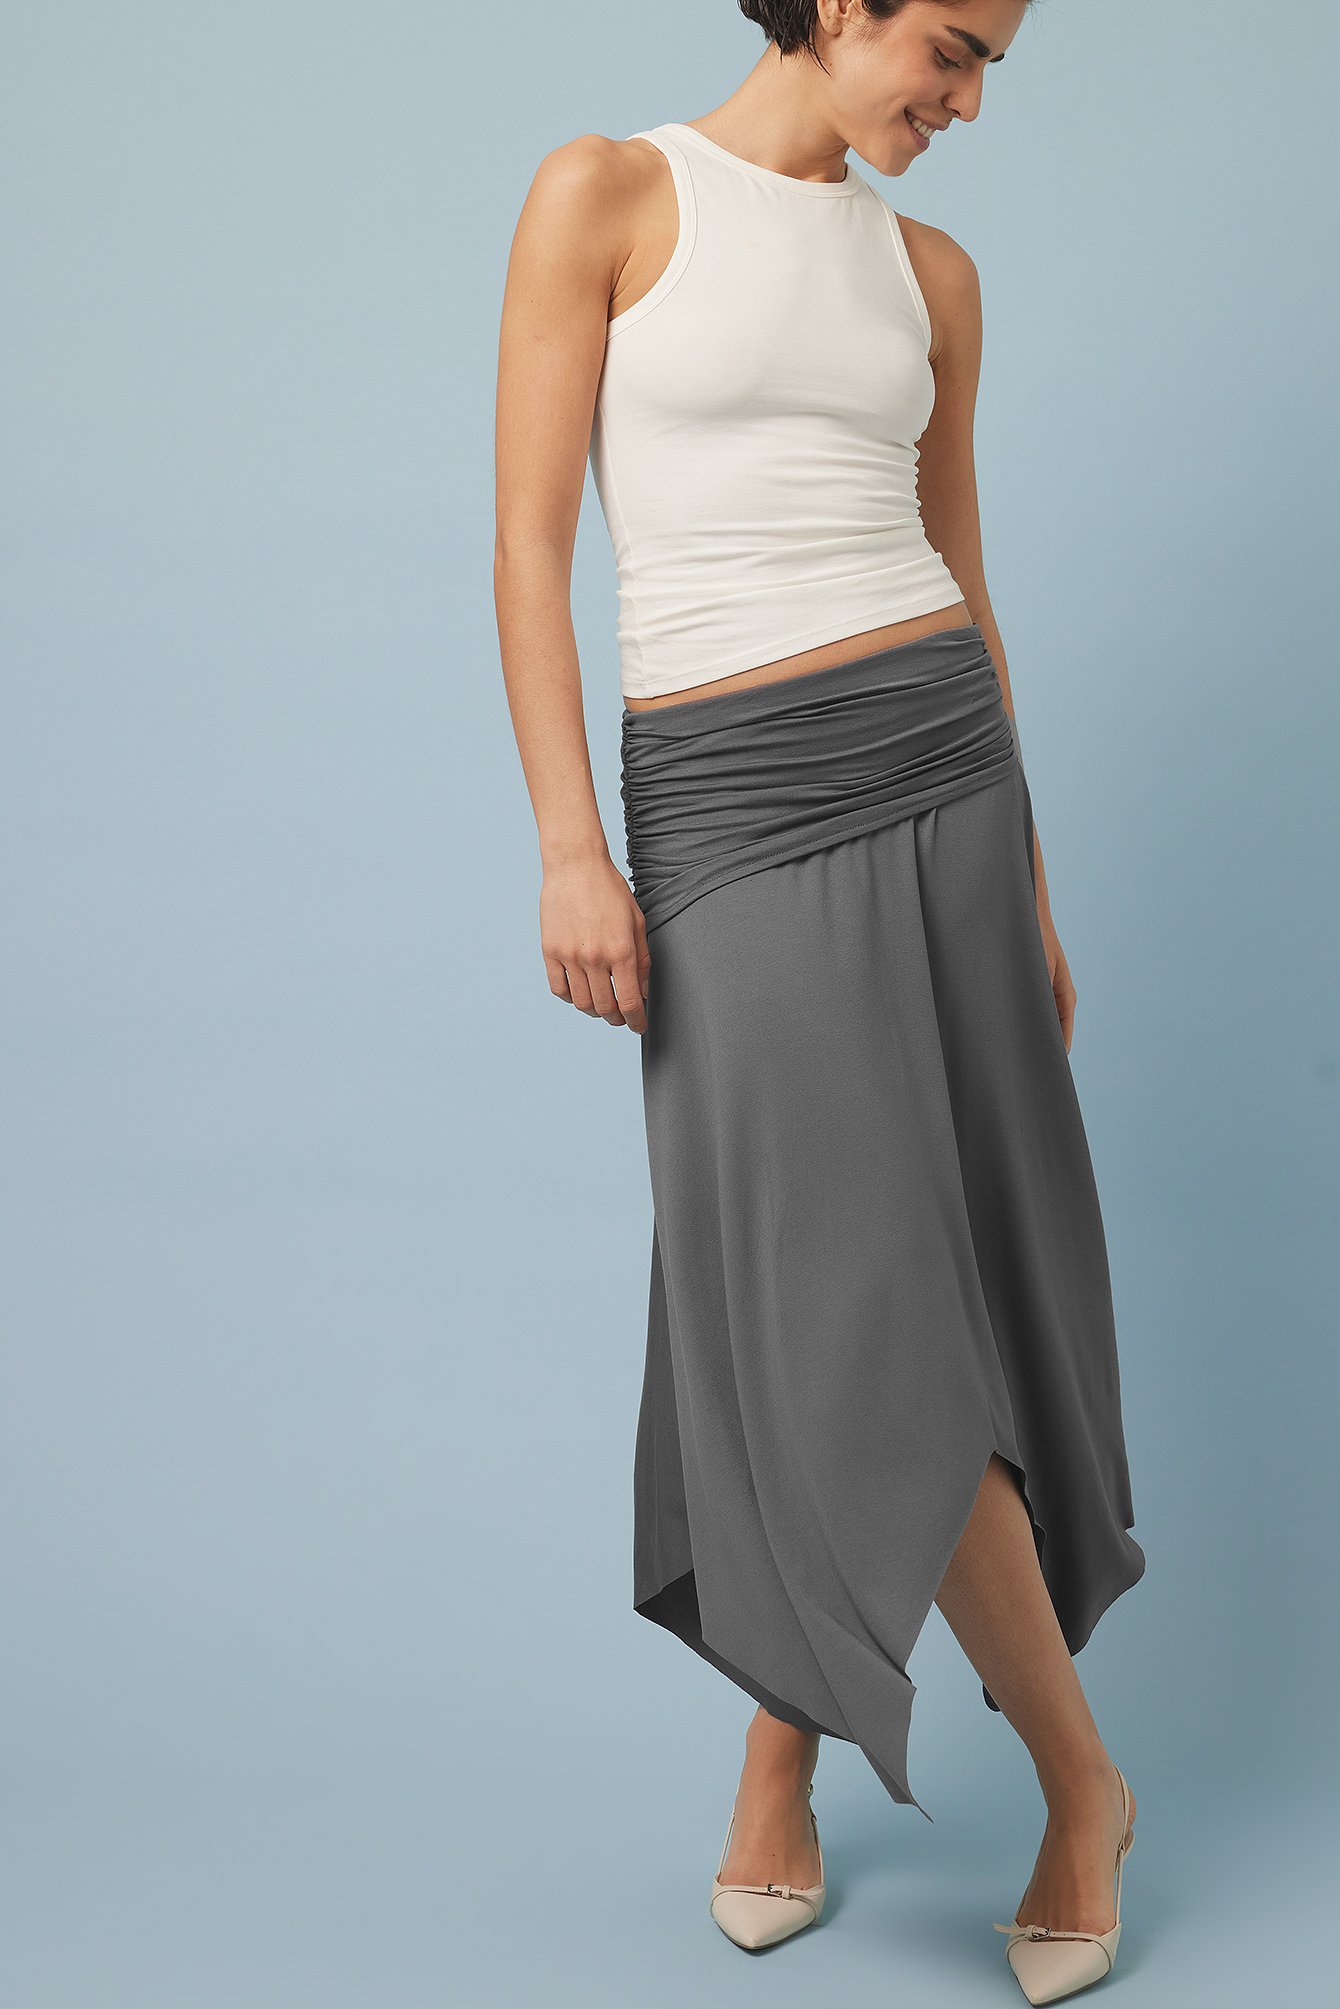 Dark Grey Soft Line Handkerchief Skirt